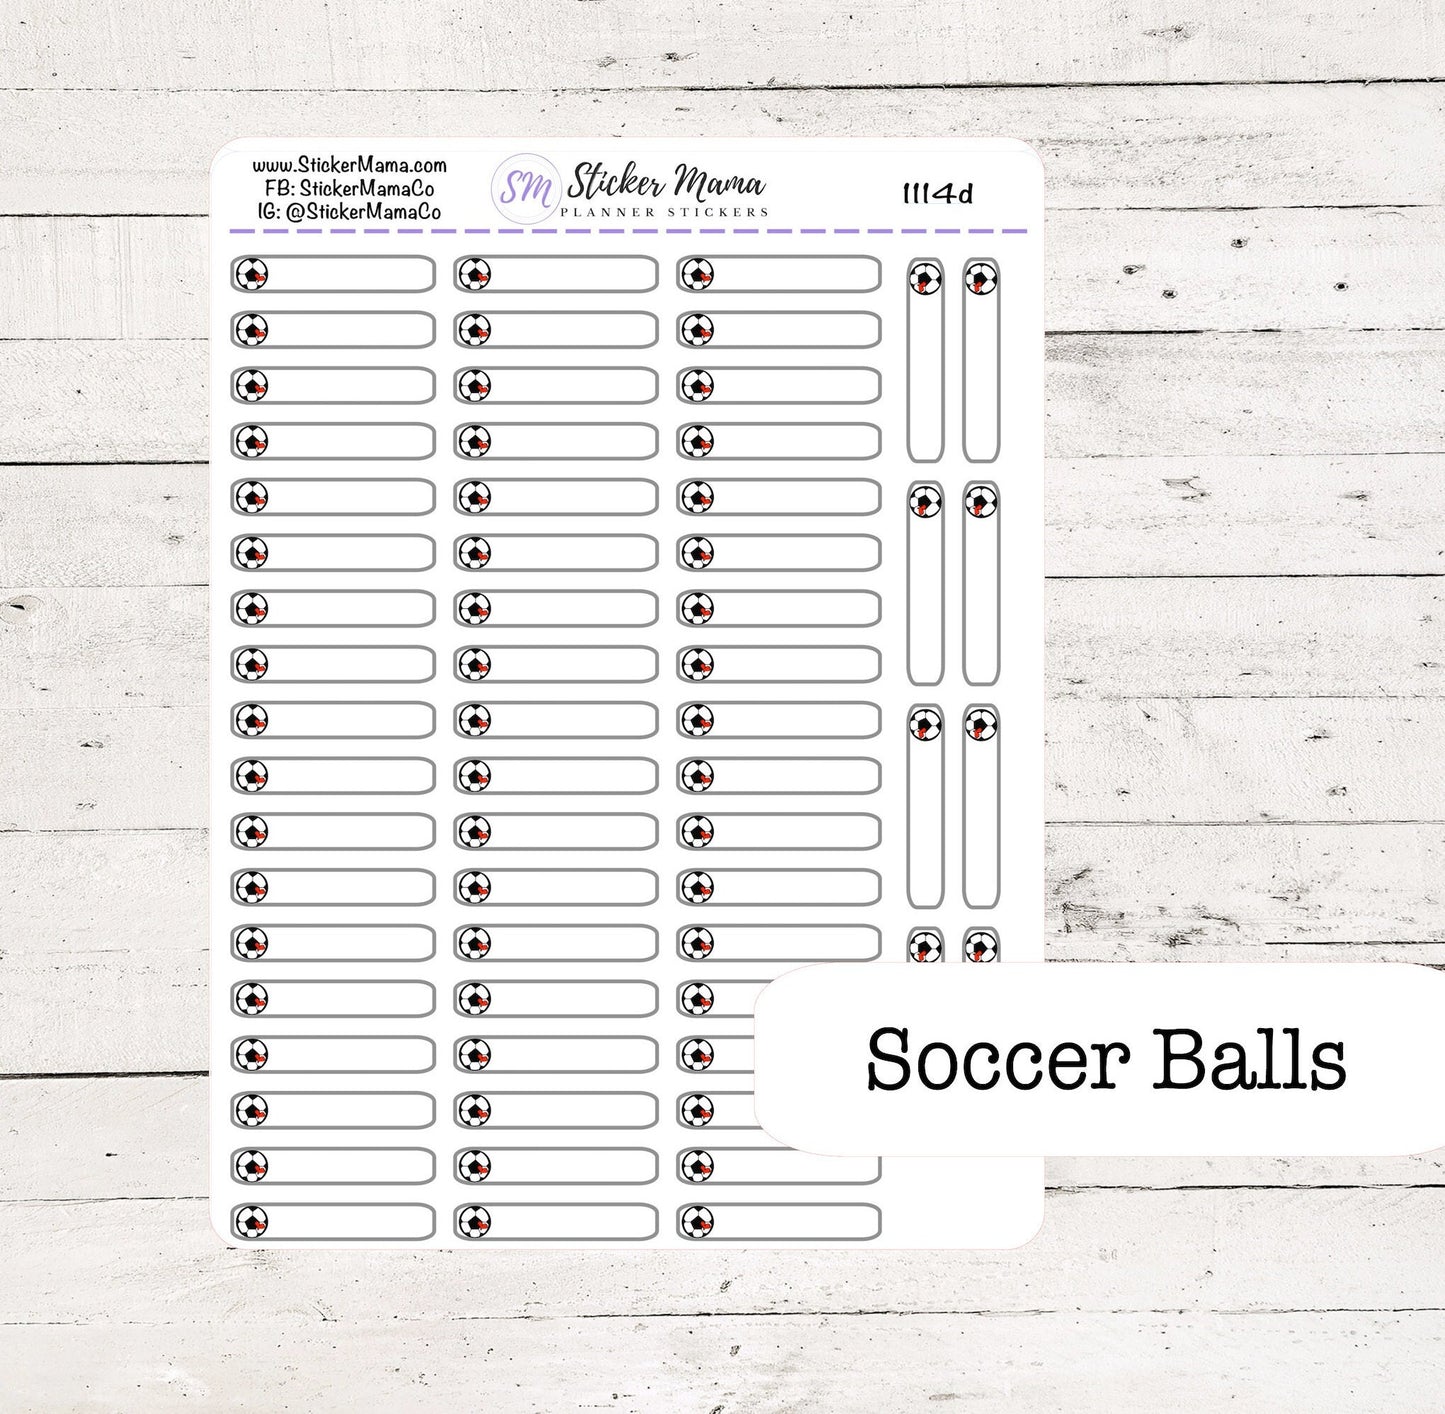 1114d - DOODLE SOCCER BALLS Planner Label Stickers  - Soccer Stickers - Soccer Games - Soccer Practice